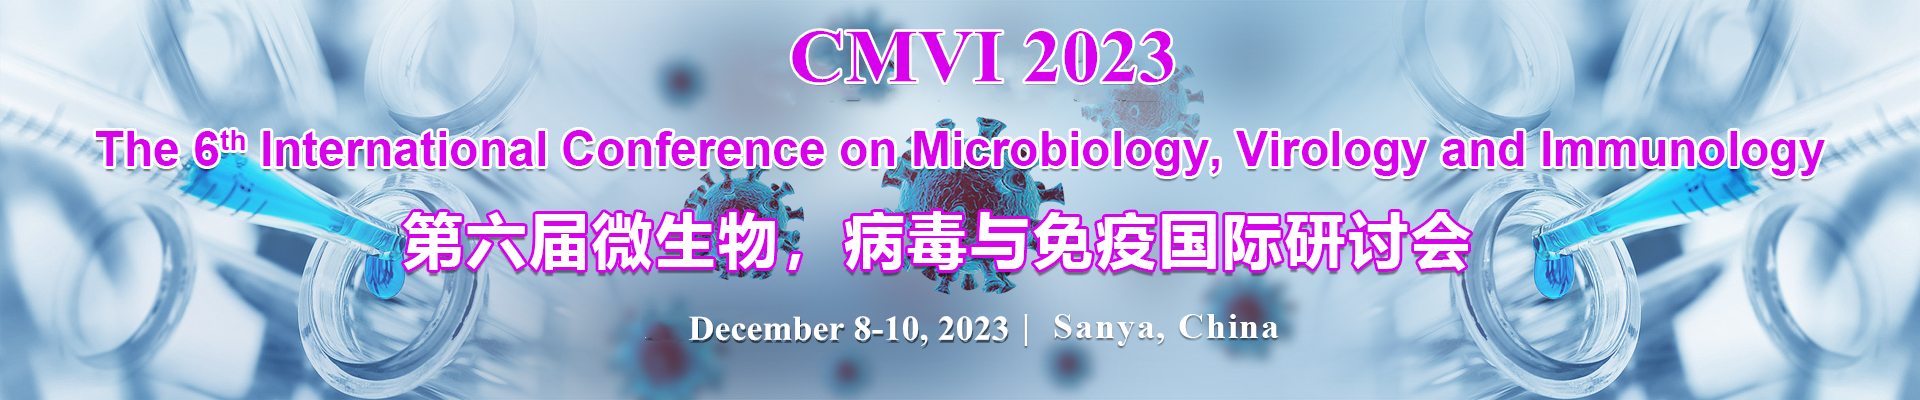 The 6th International Conference on Microbiology, Virology and Immunology (CMVI 2023), Sanya, Hainan, China